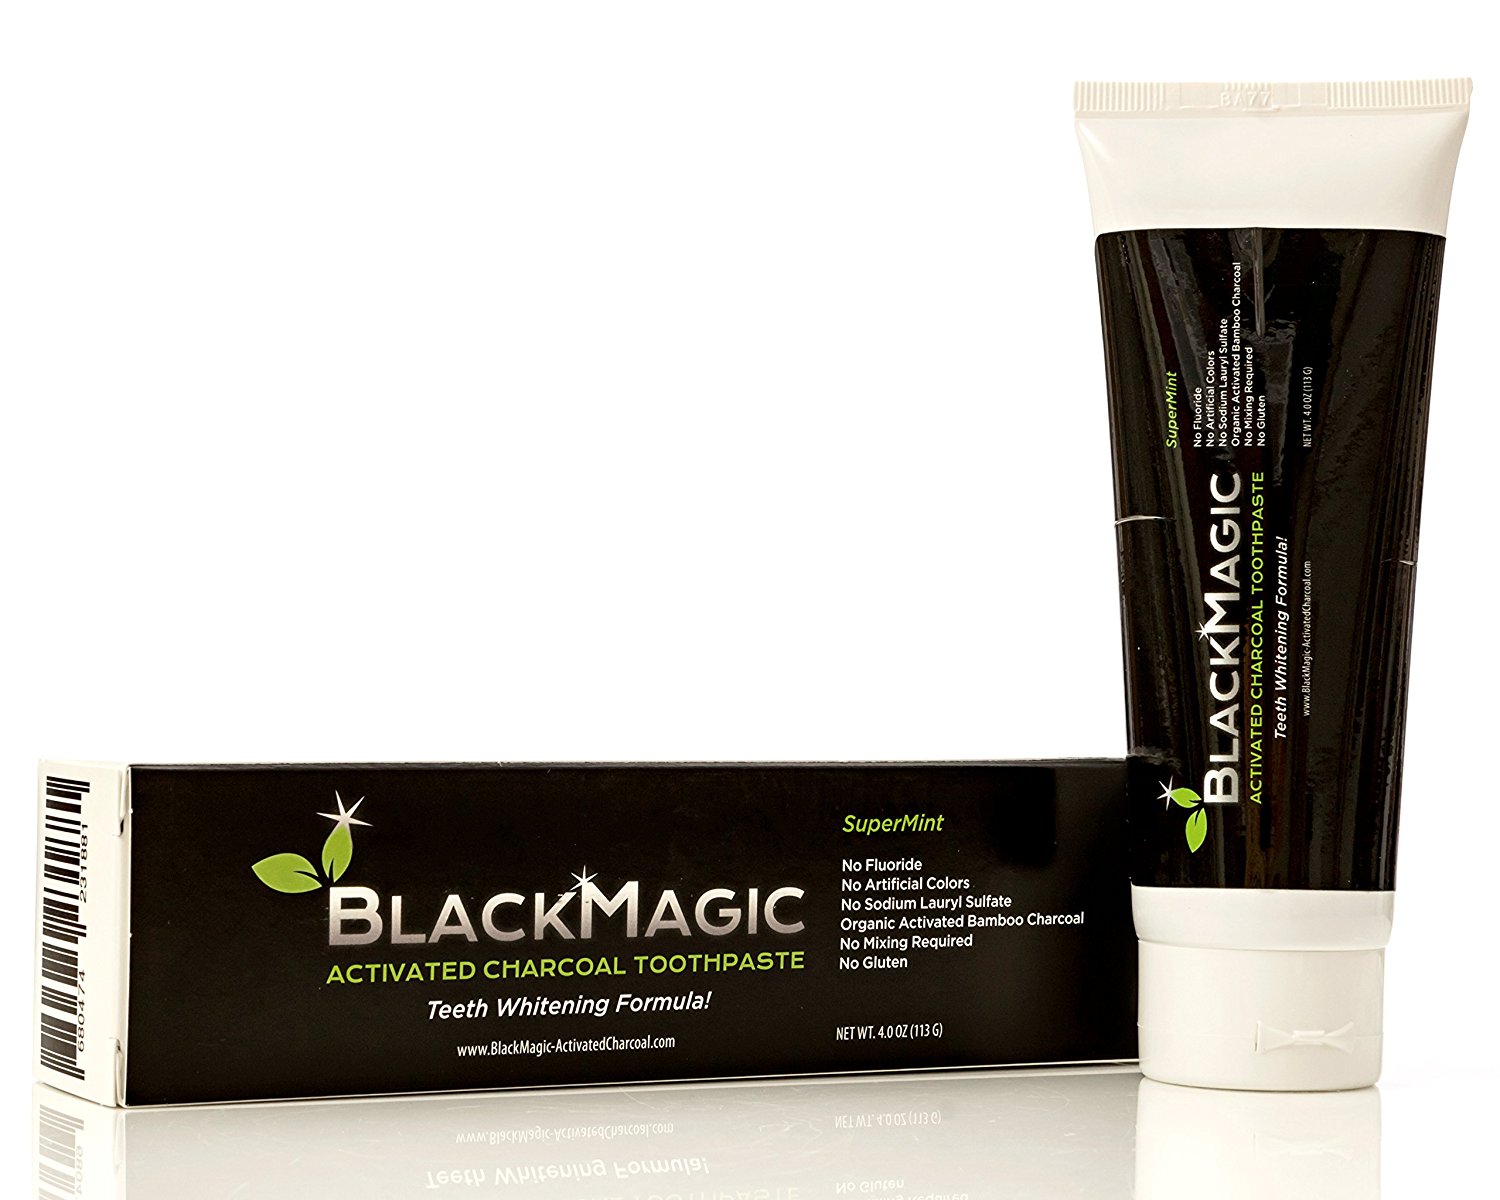 Blackmagic toothpaste